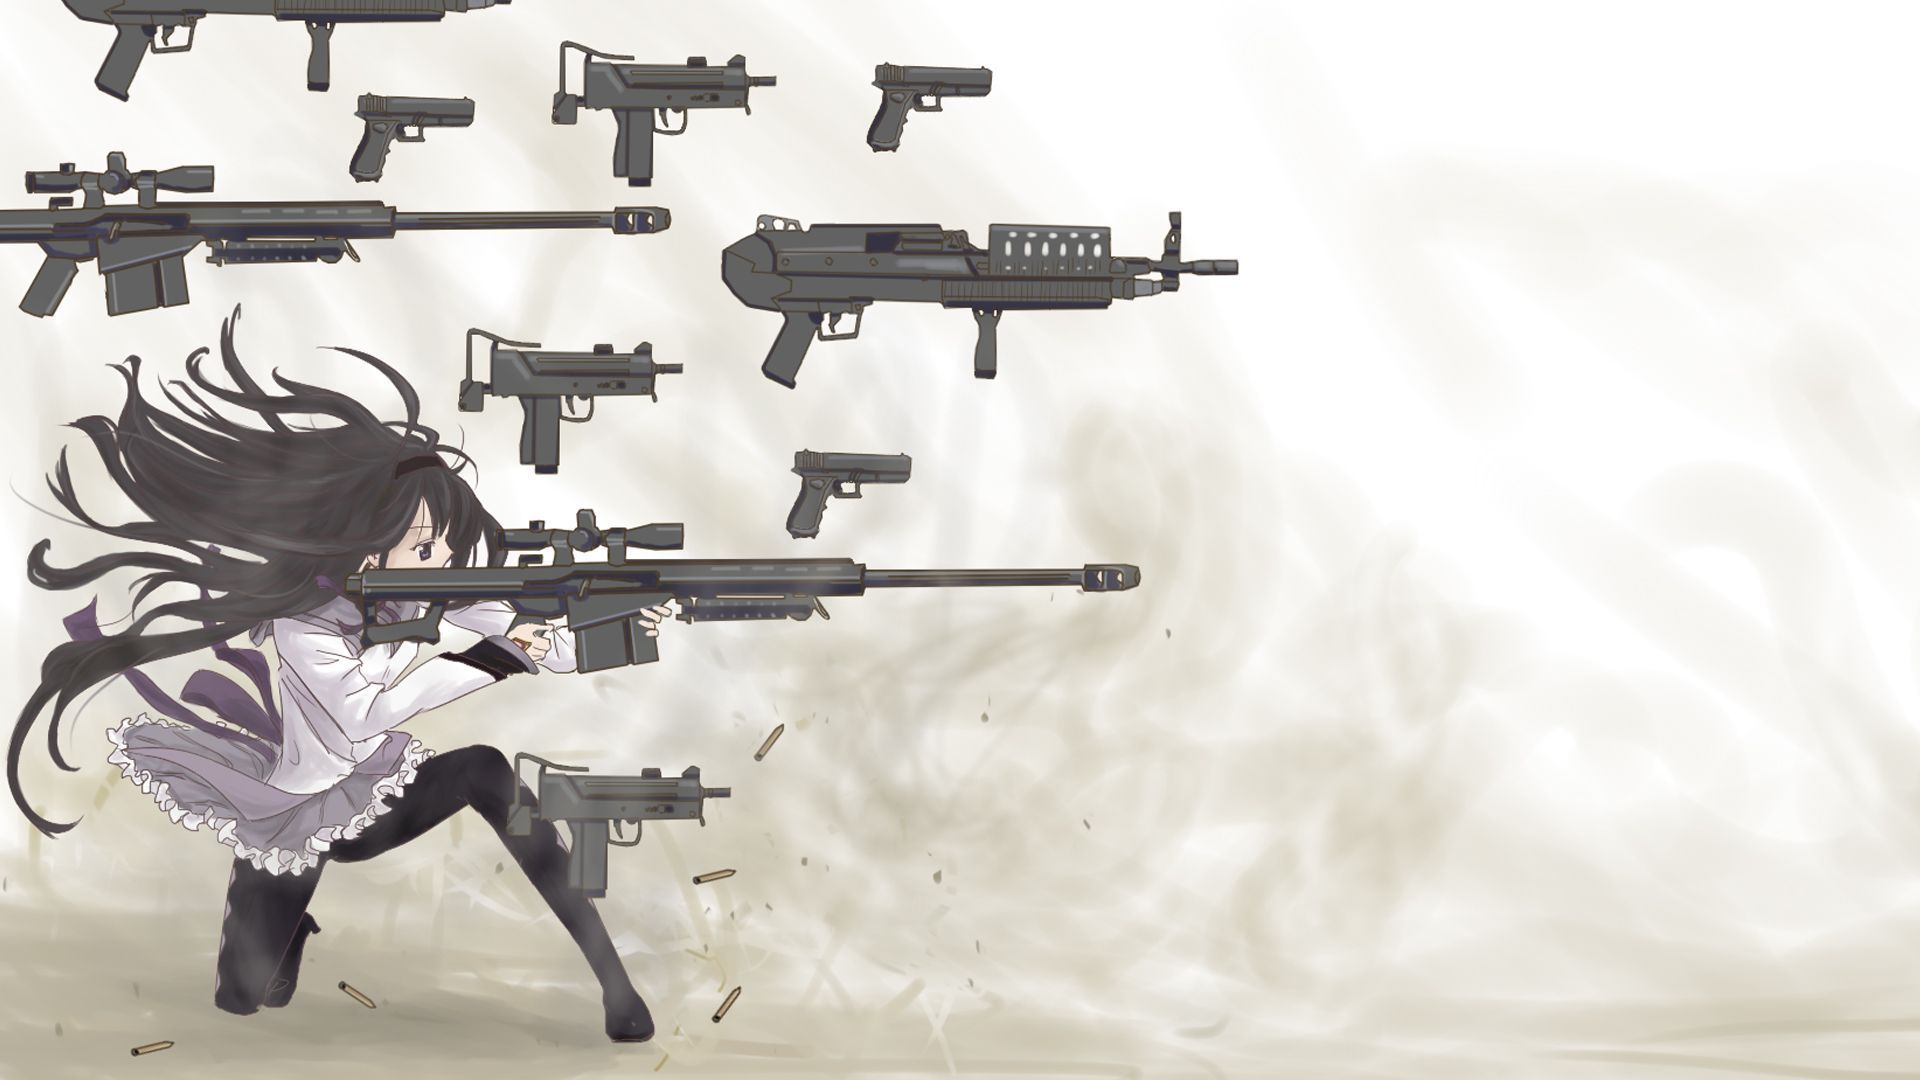 Anime Girls With Guns HD Wallpaperx1080